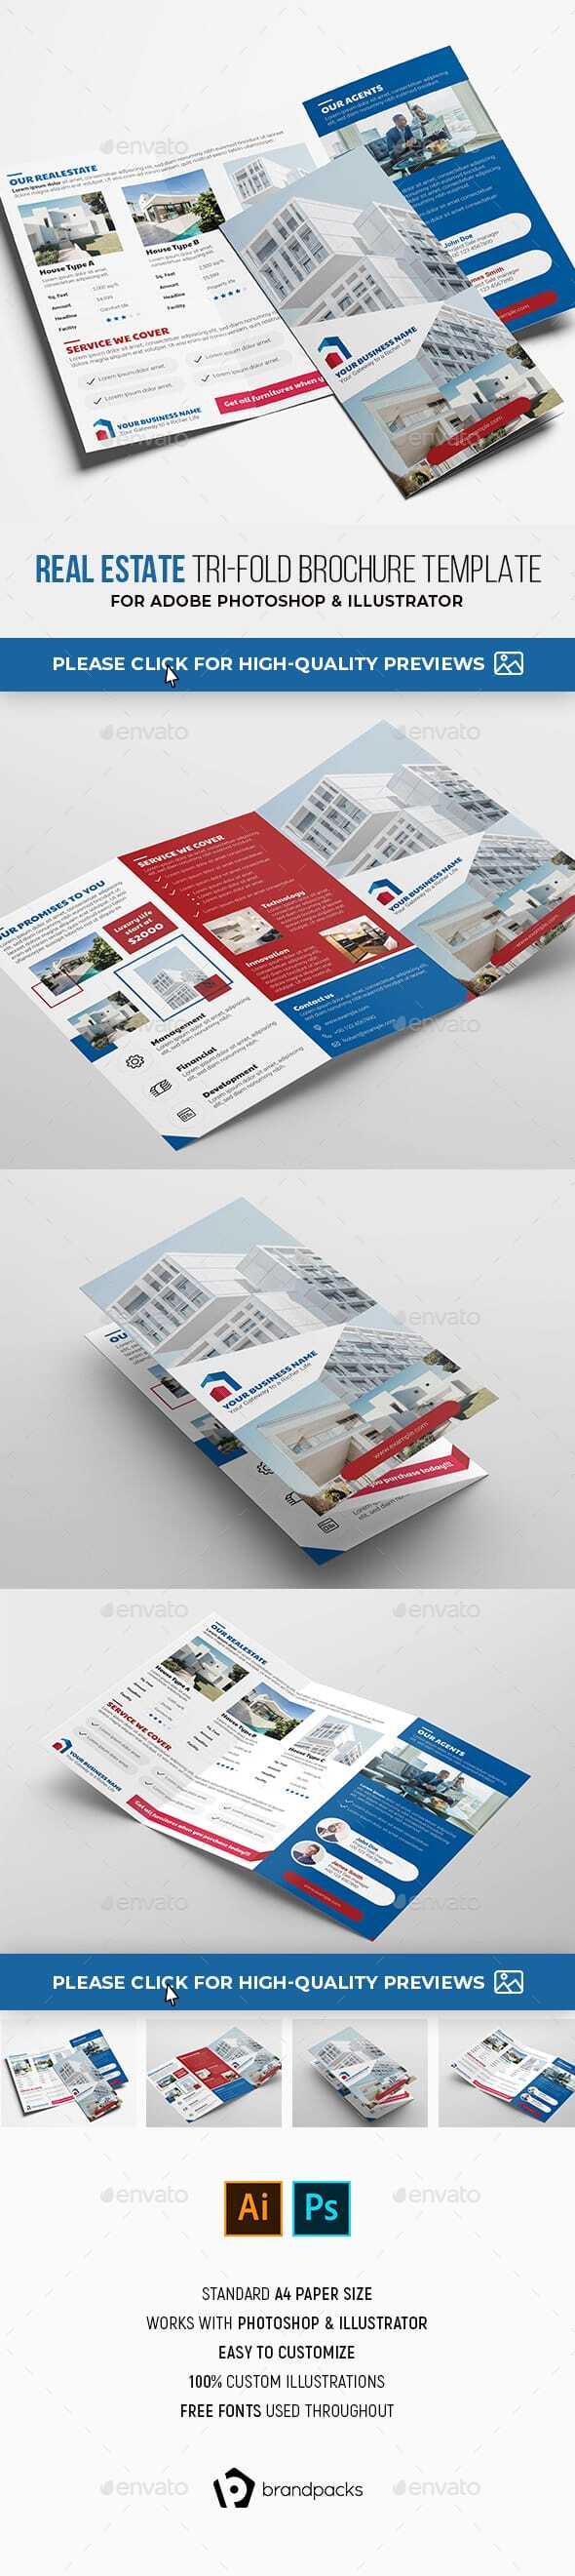 Real Estate Tri-Fold Brochure